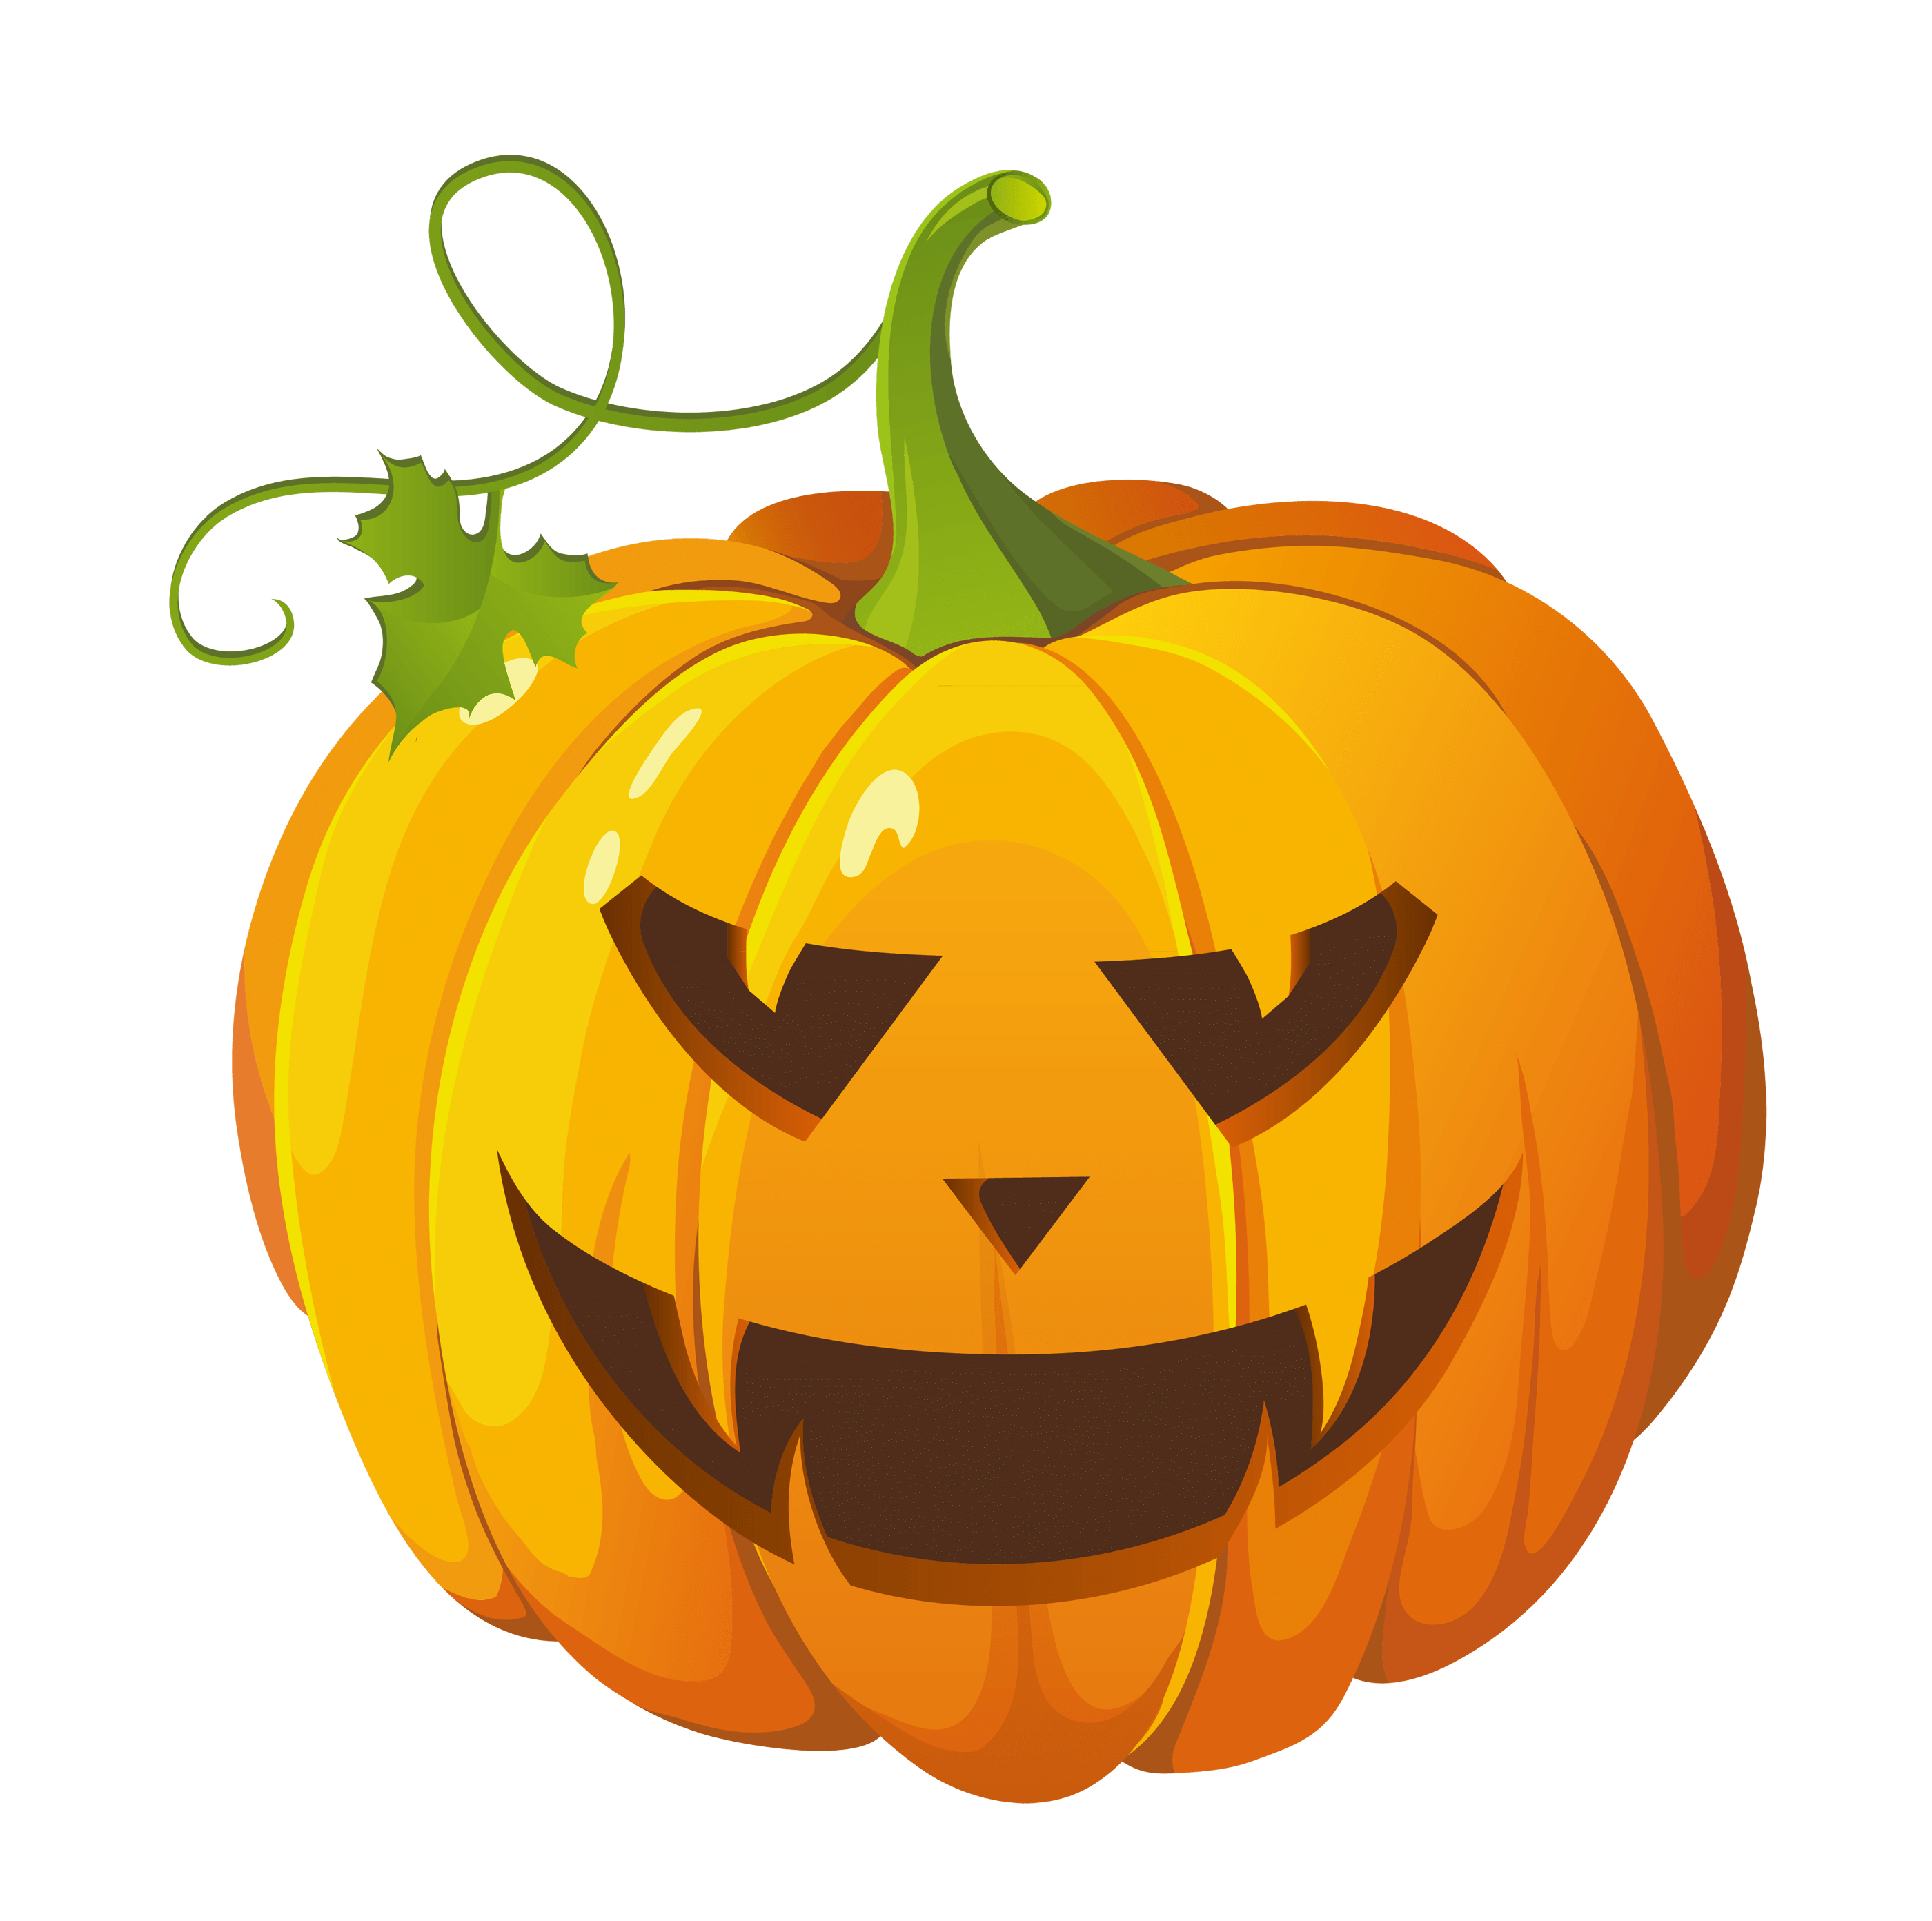 Halloween Pumpkin PNG Image in High Definition